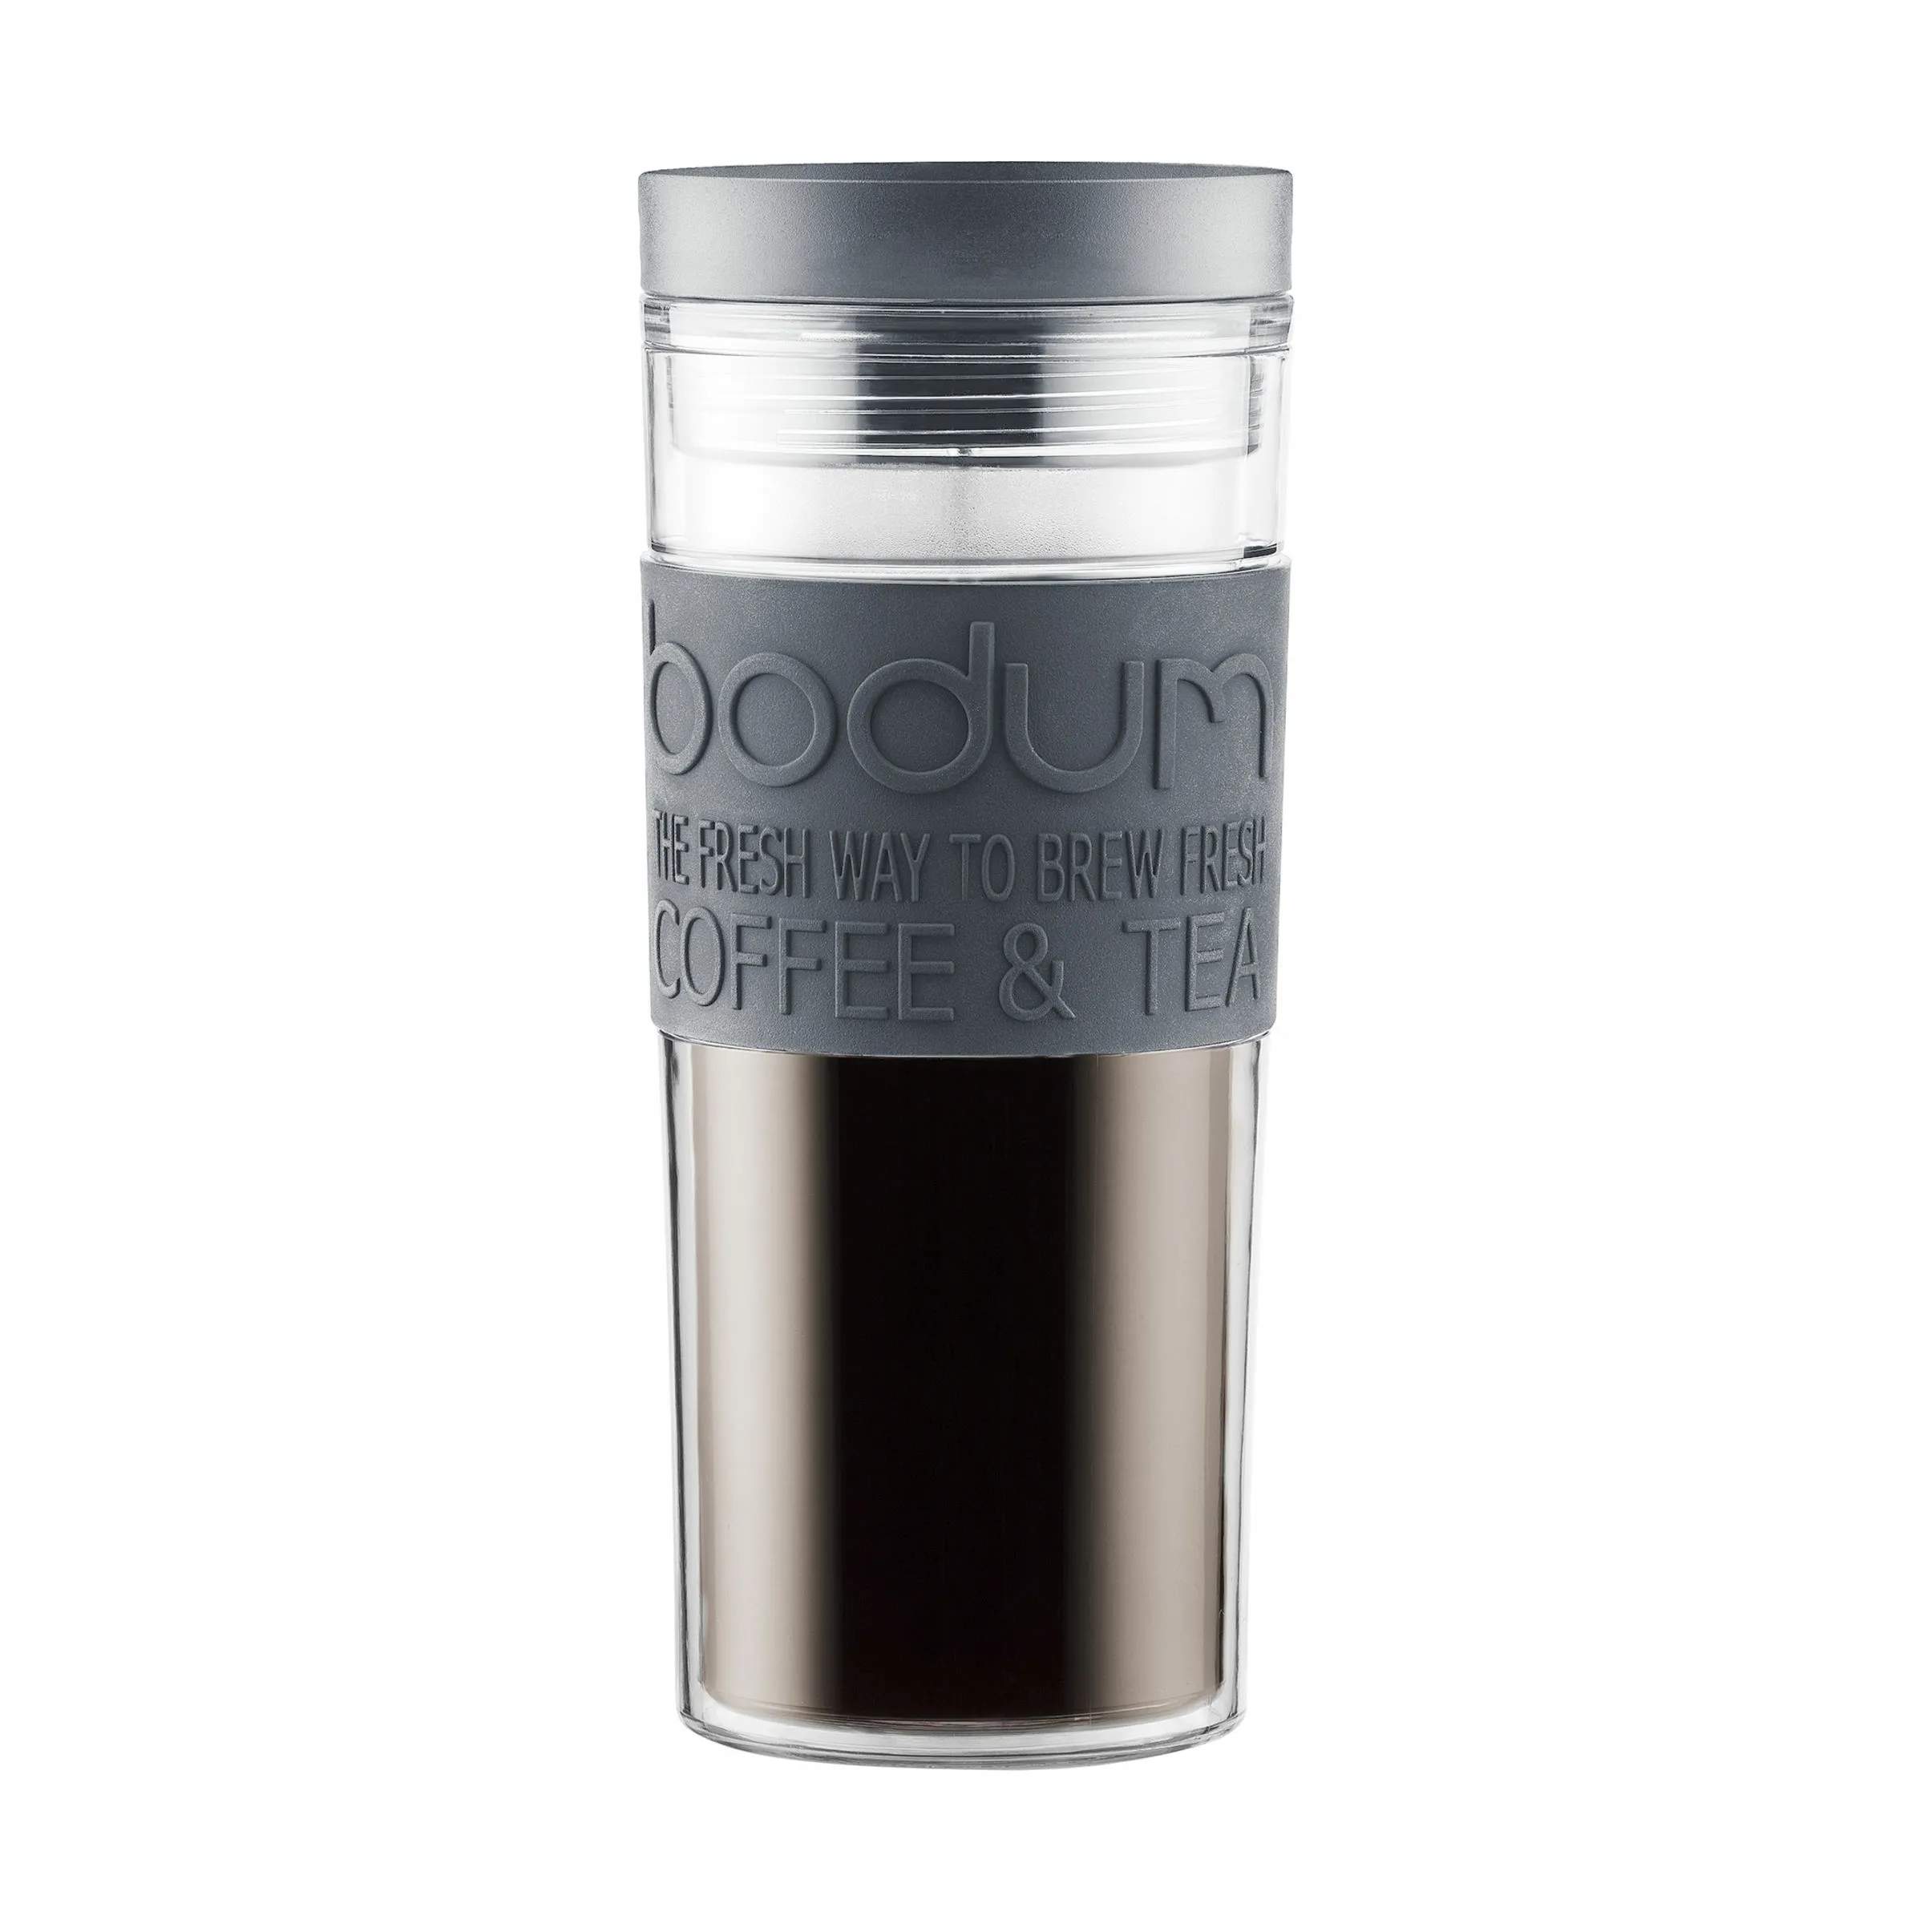 Fortolke Tilbageholdenhed Opaque Bodum - Rejsekrus - 0,45 liter - BPA-fri plastik - Grå | Imerco